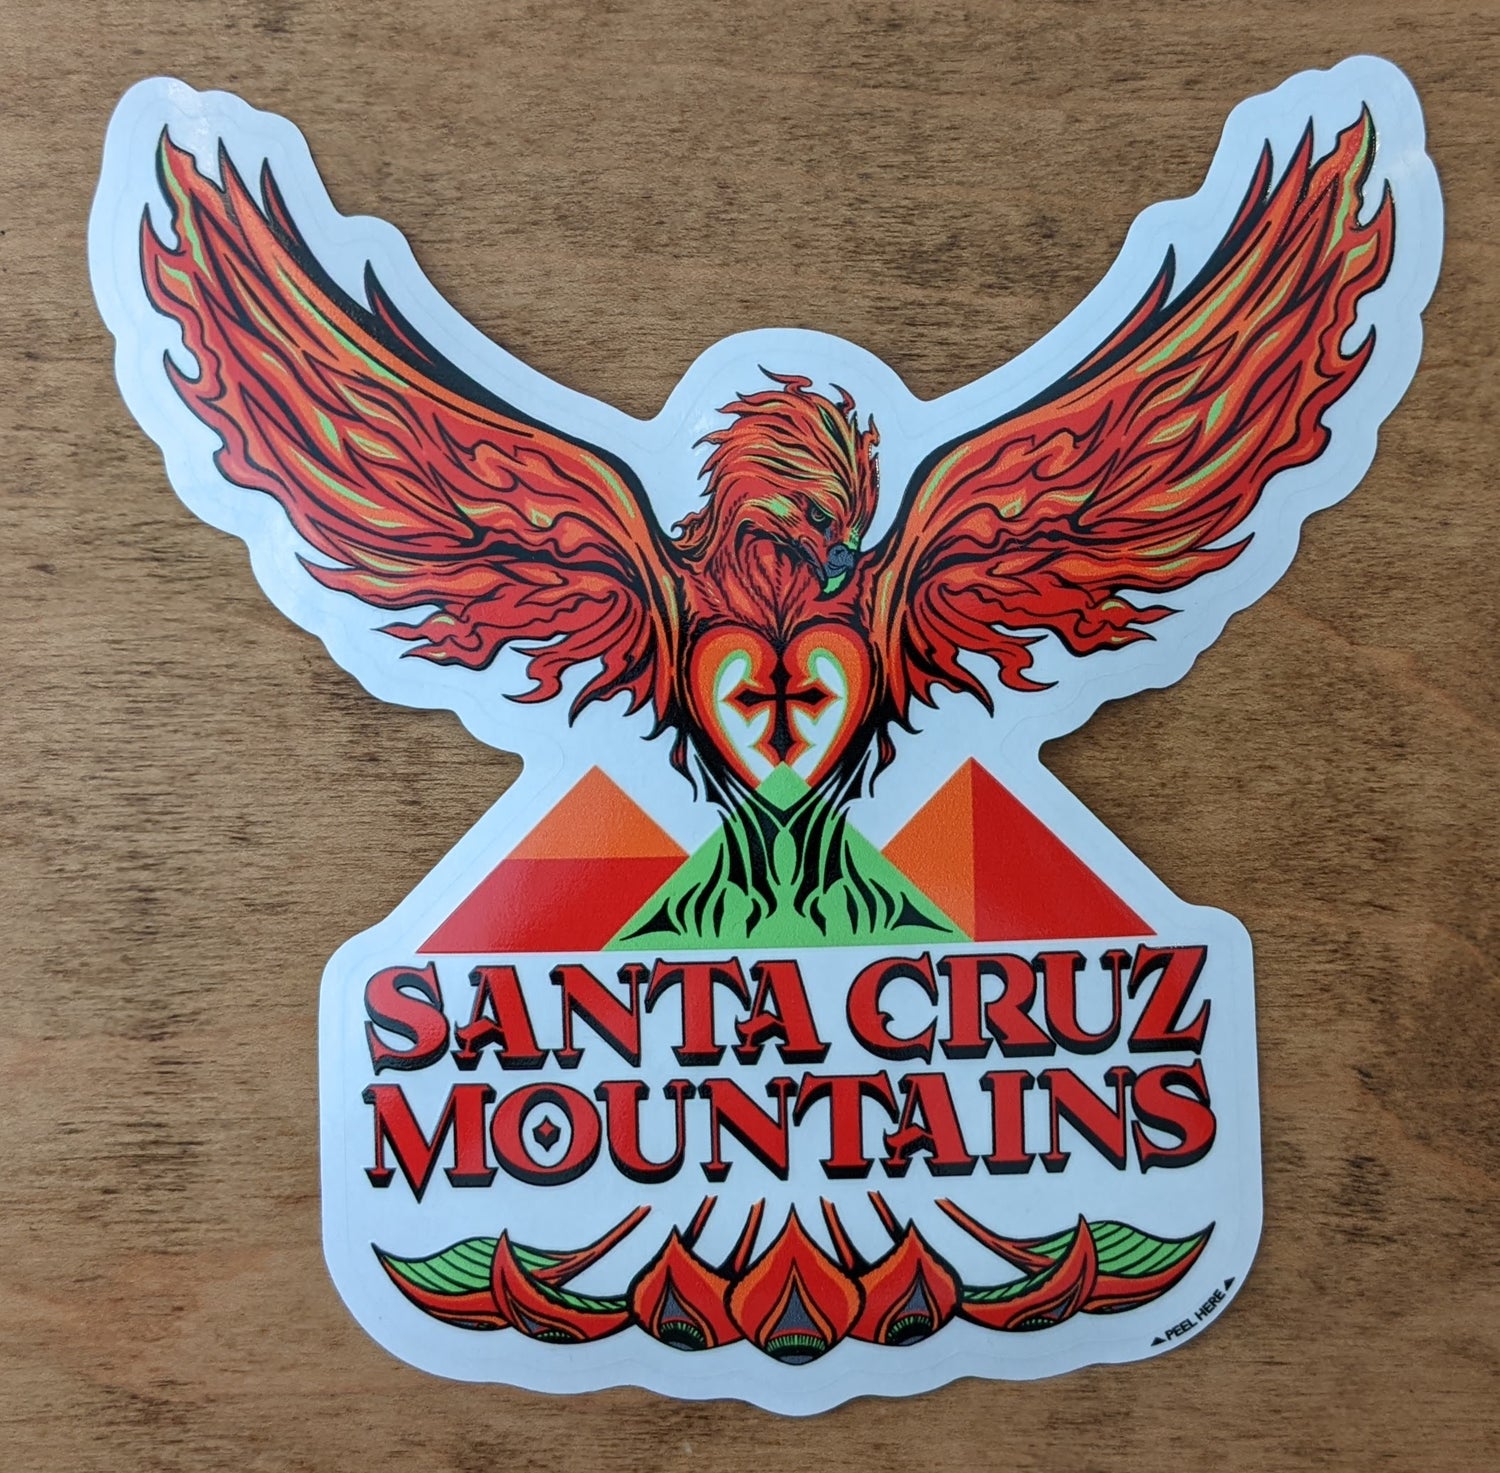 Rising Phoenix decal reading" Santa Cruz Mountains" designed by Joe Fenton, produced by Rugged Coast